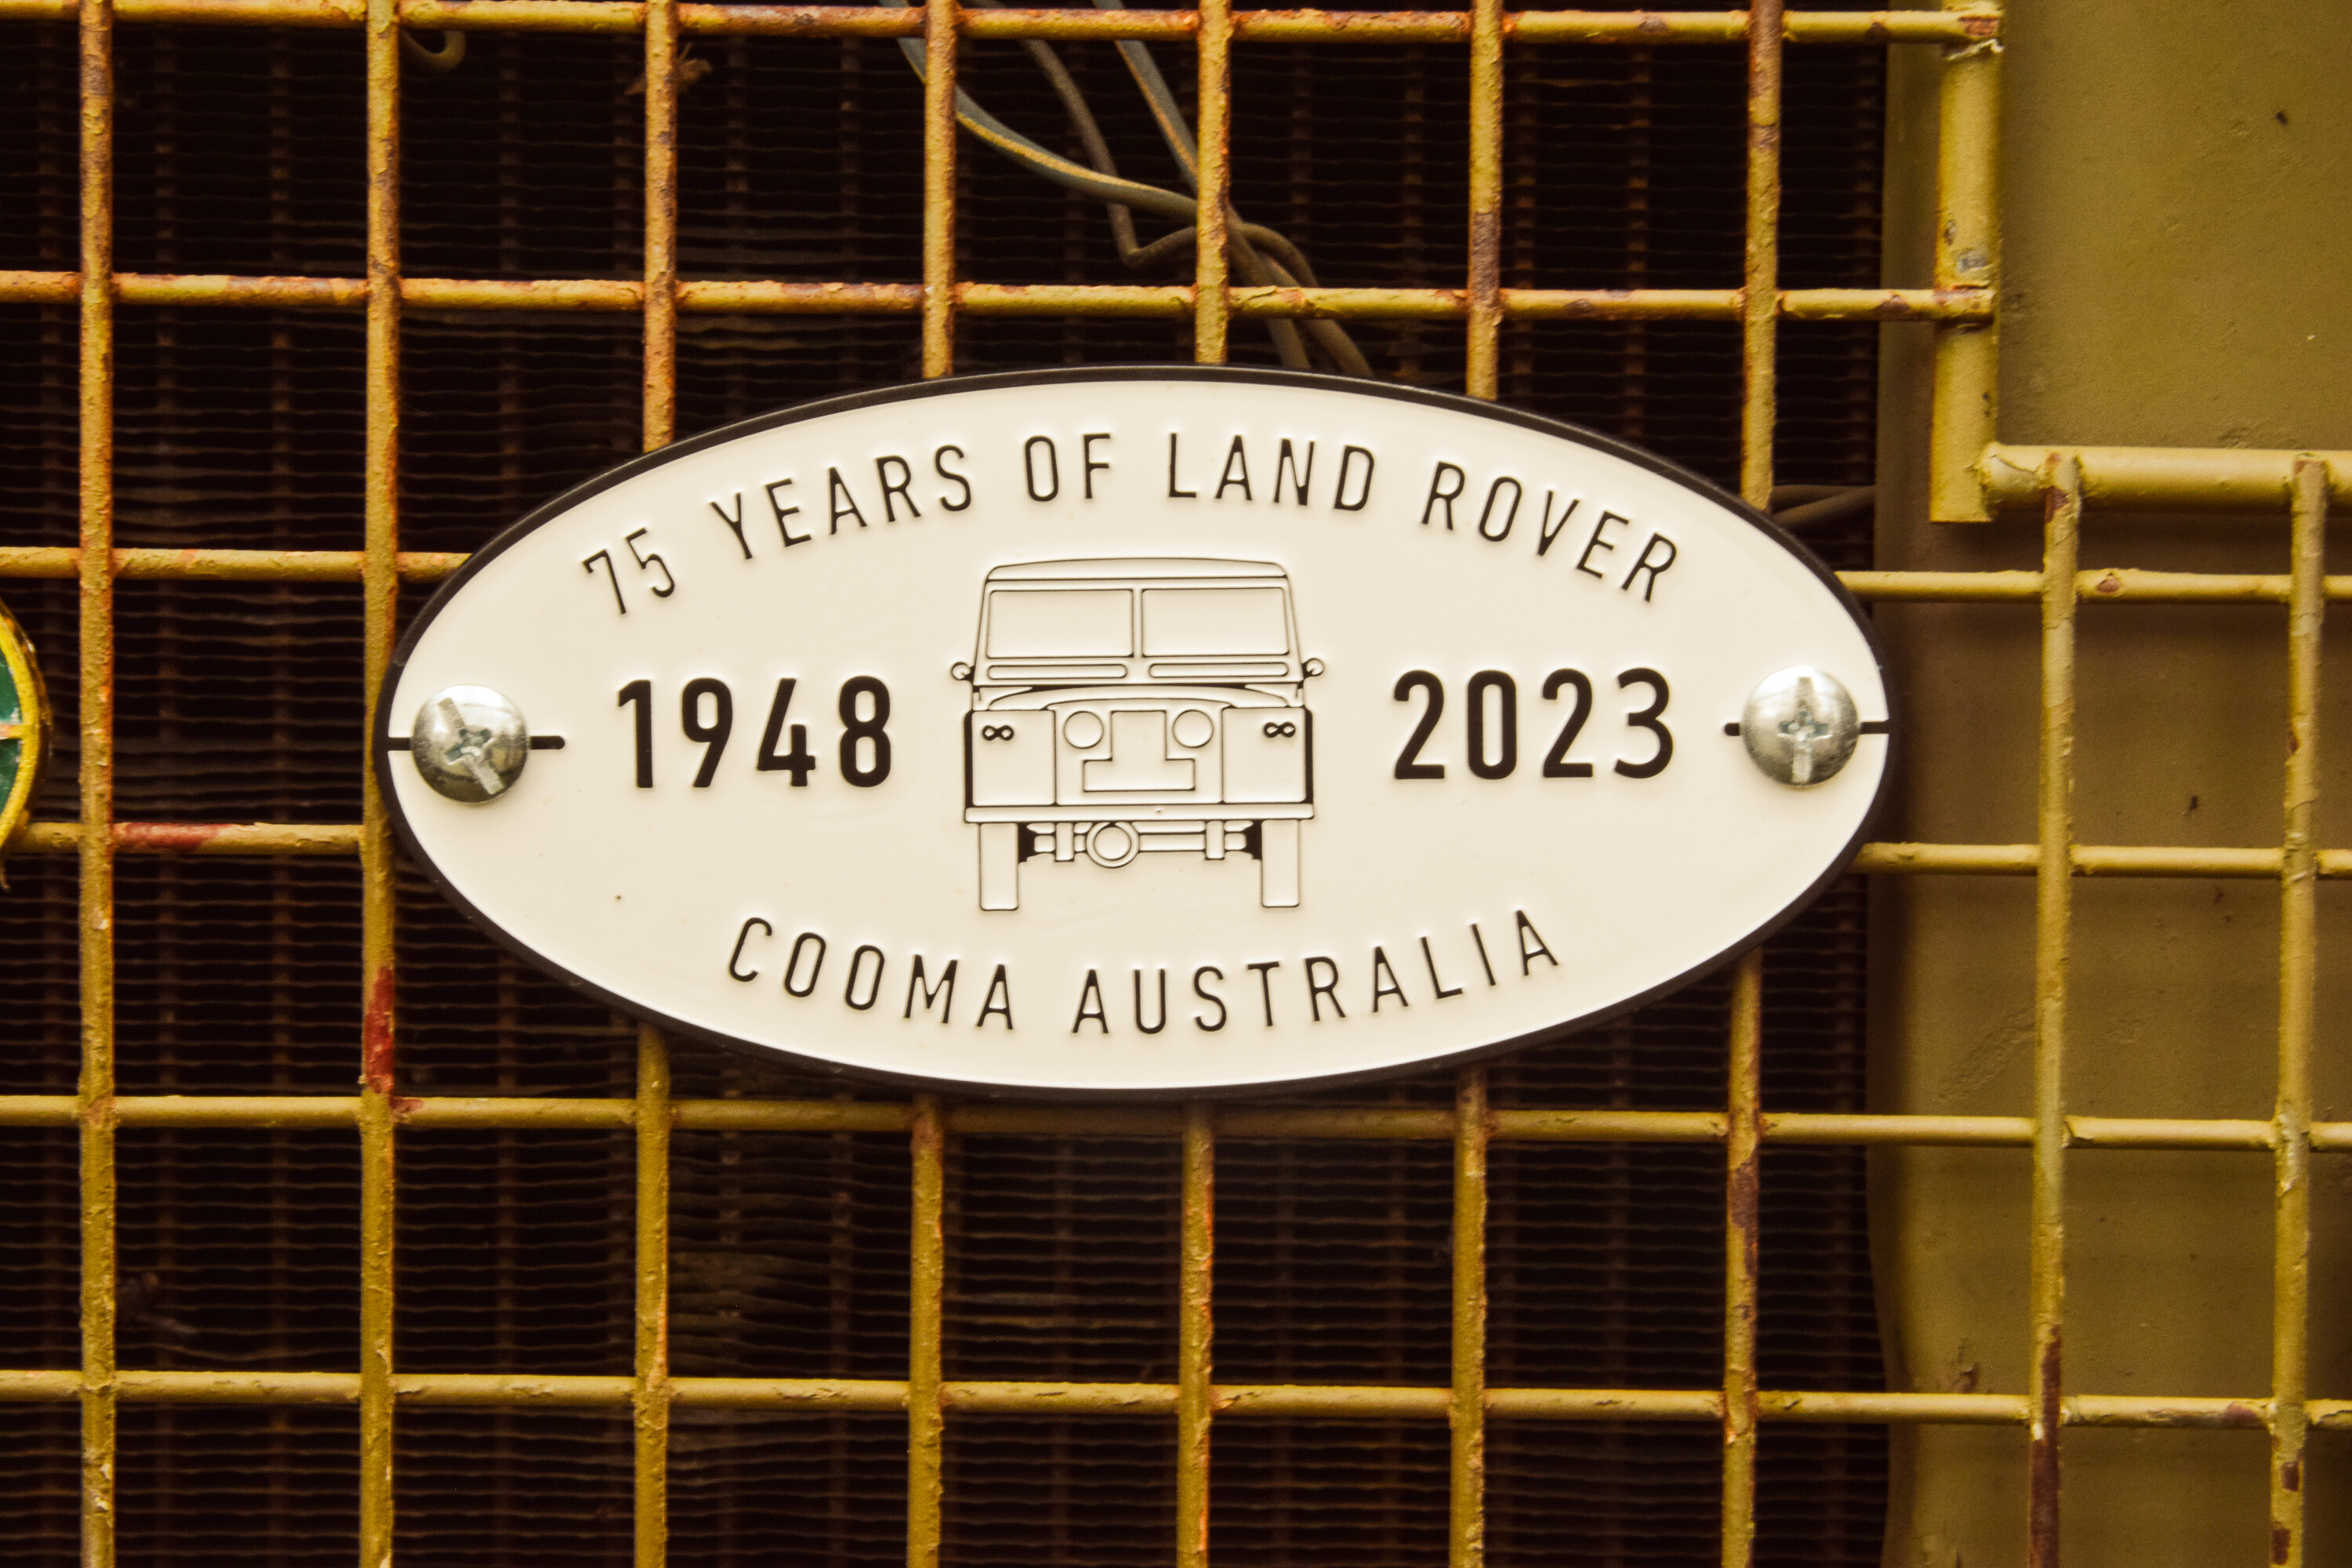 e357158d/land rover 75th anniversary cooma 15 jpg